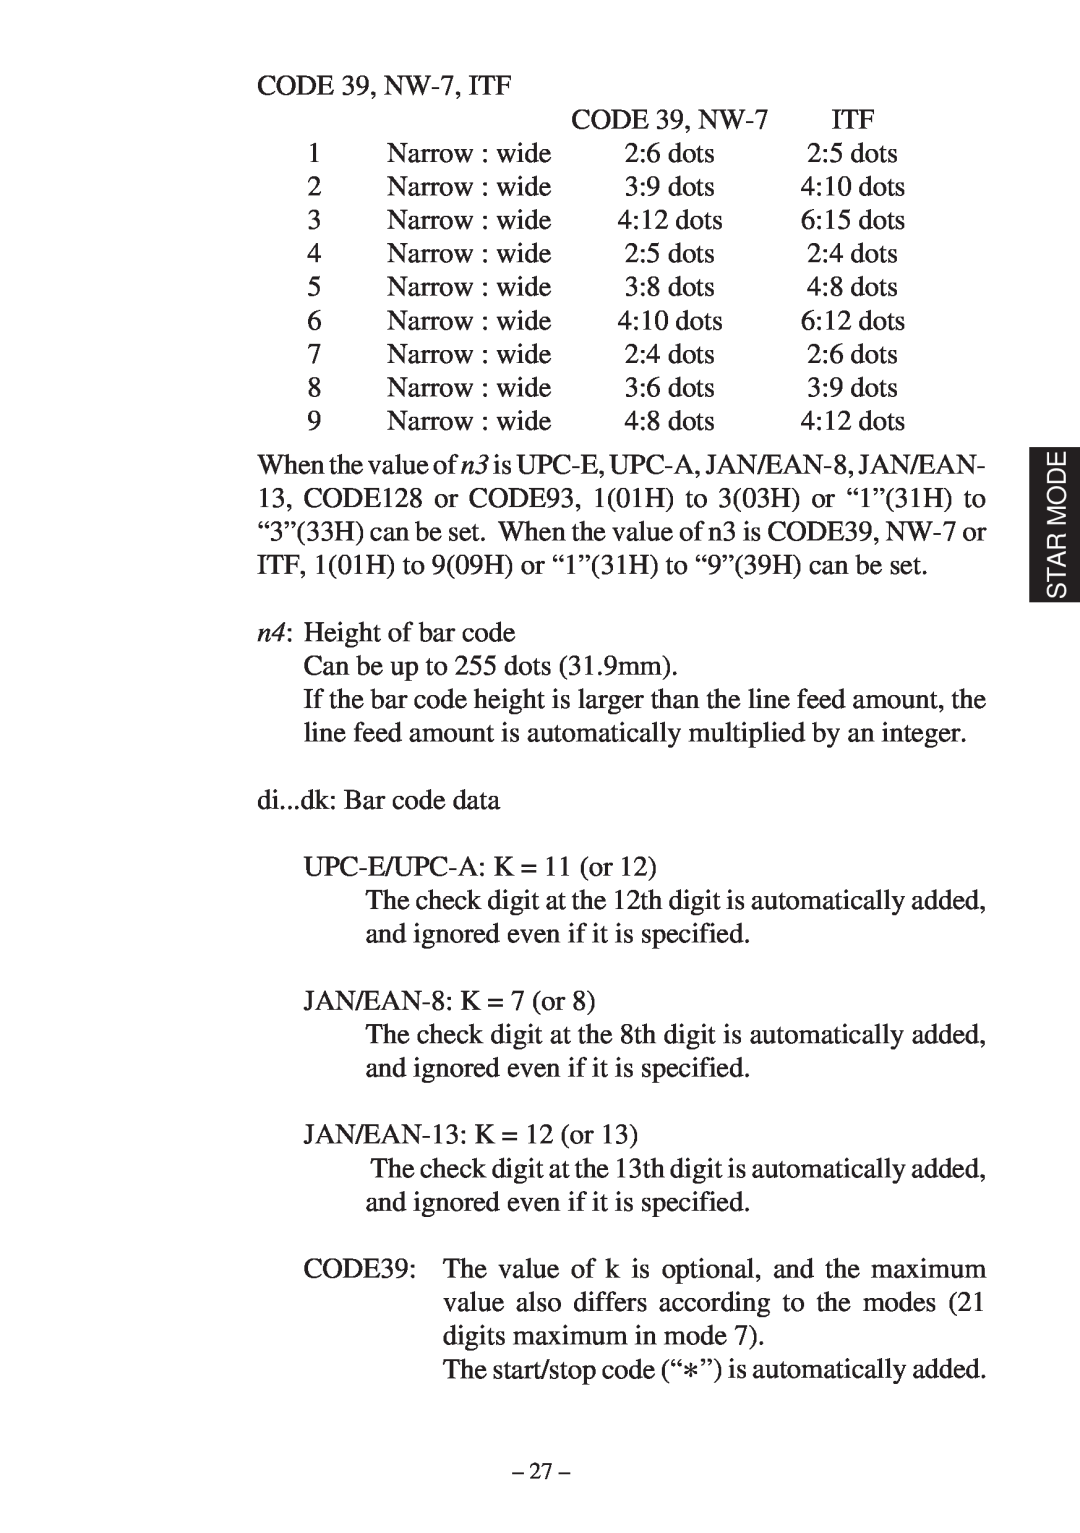 Star Micronics RS232 manual CODE 39, NW-7 